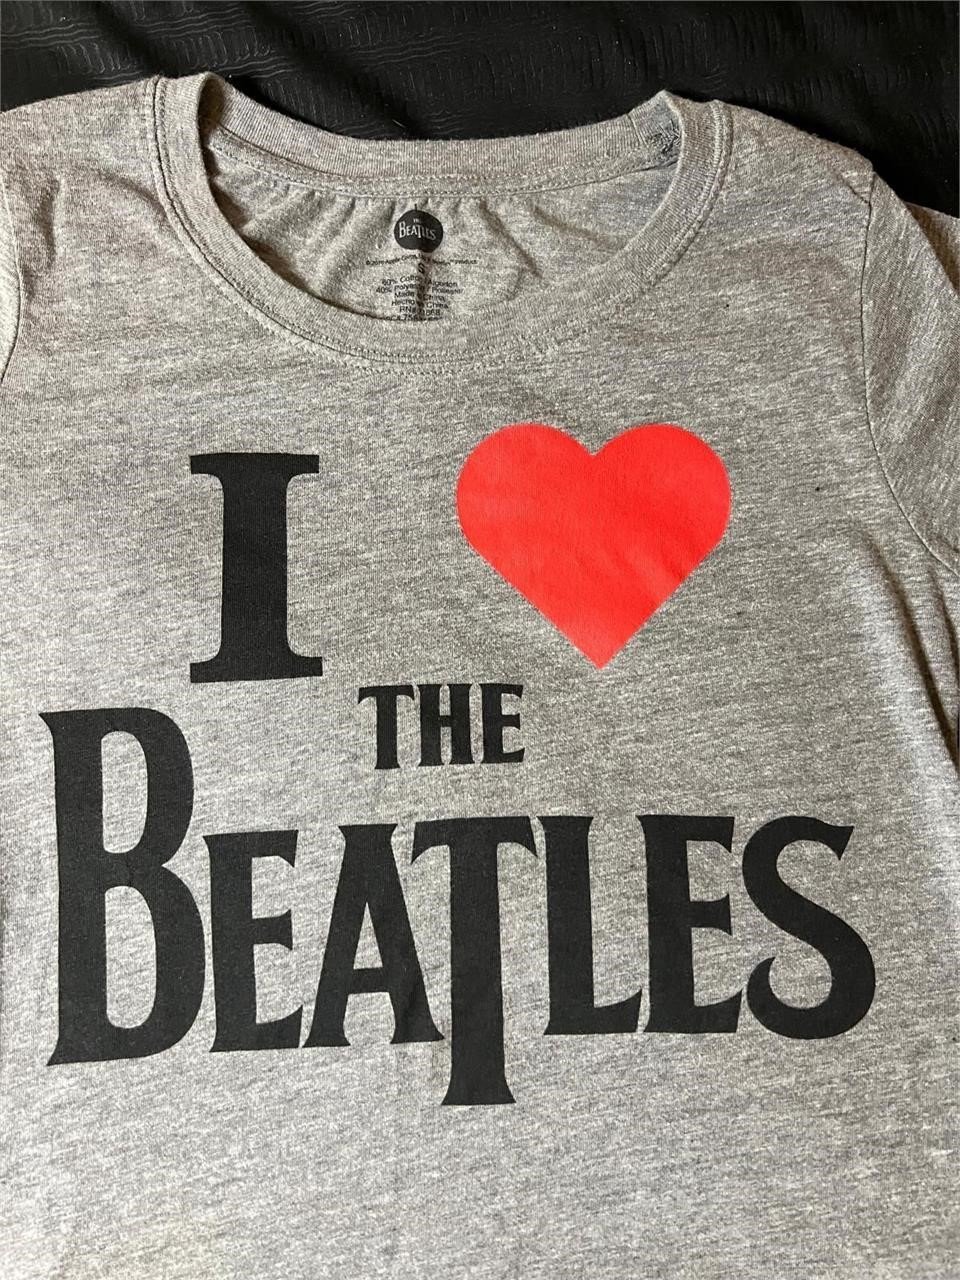 Collectible Beatles Shirt and Book